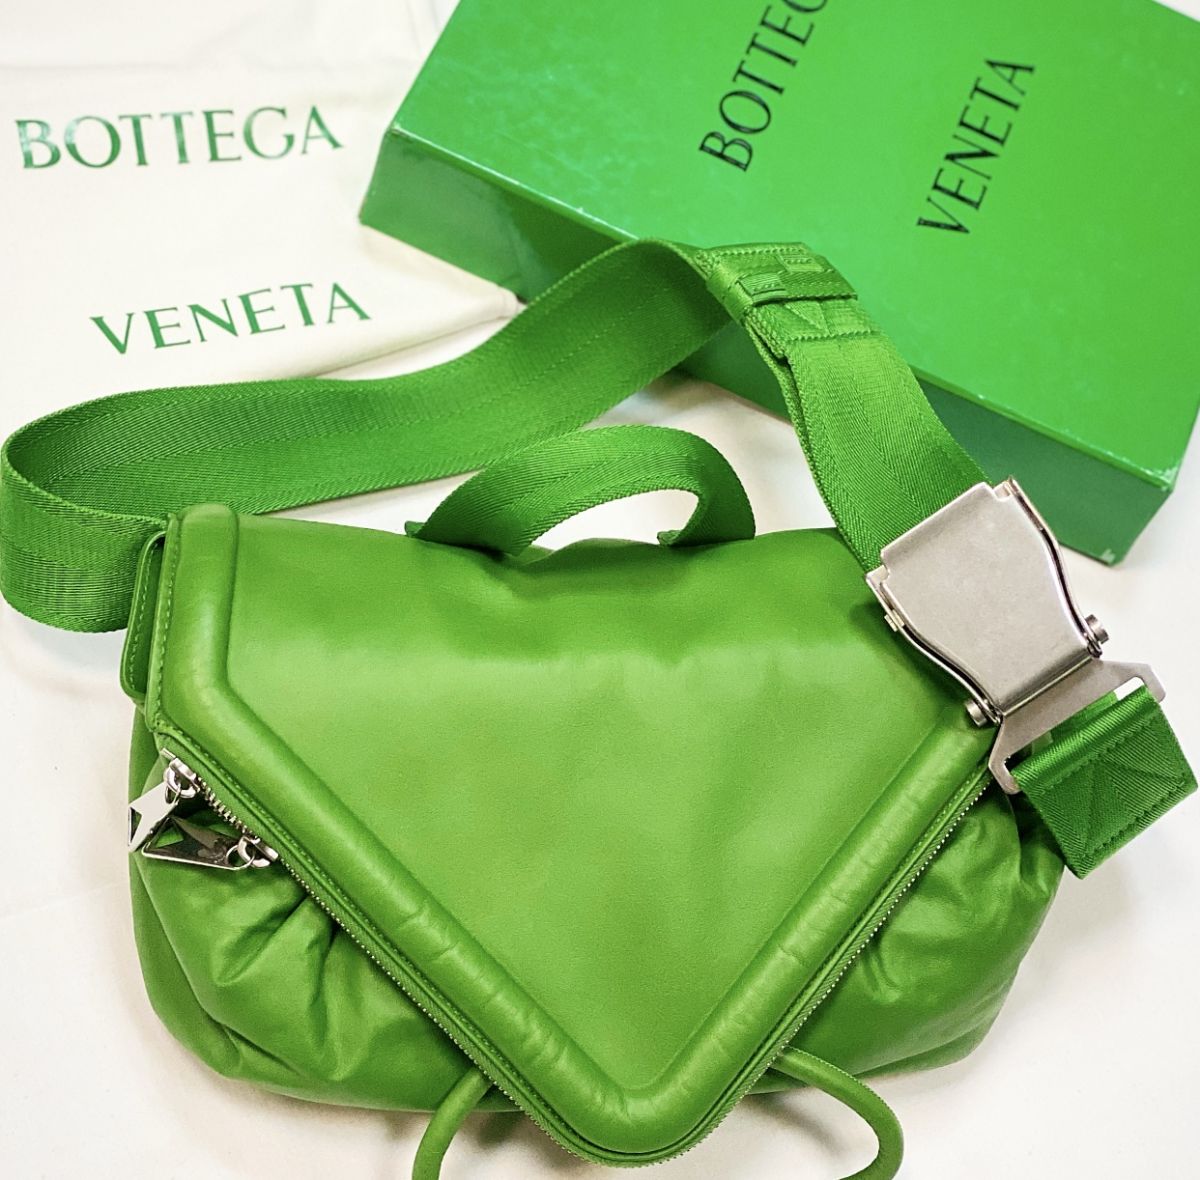 Сумка Bottega Veneta размер 30/20 цена 123 847 руб 